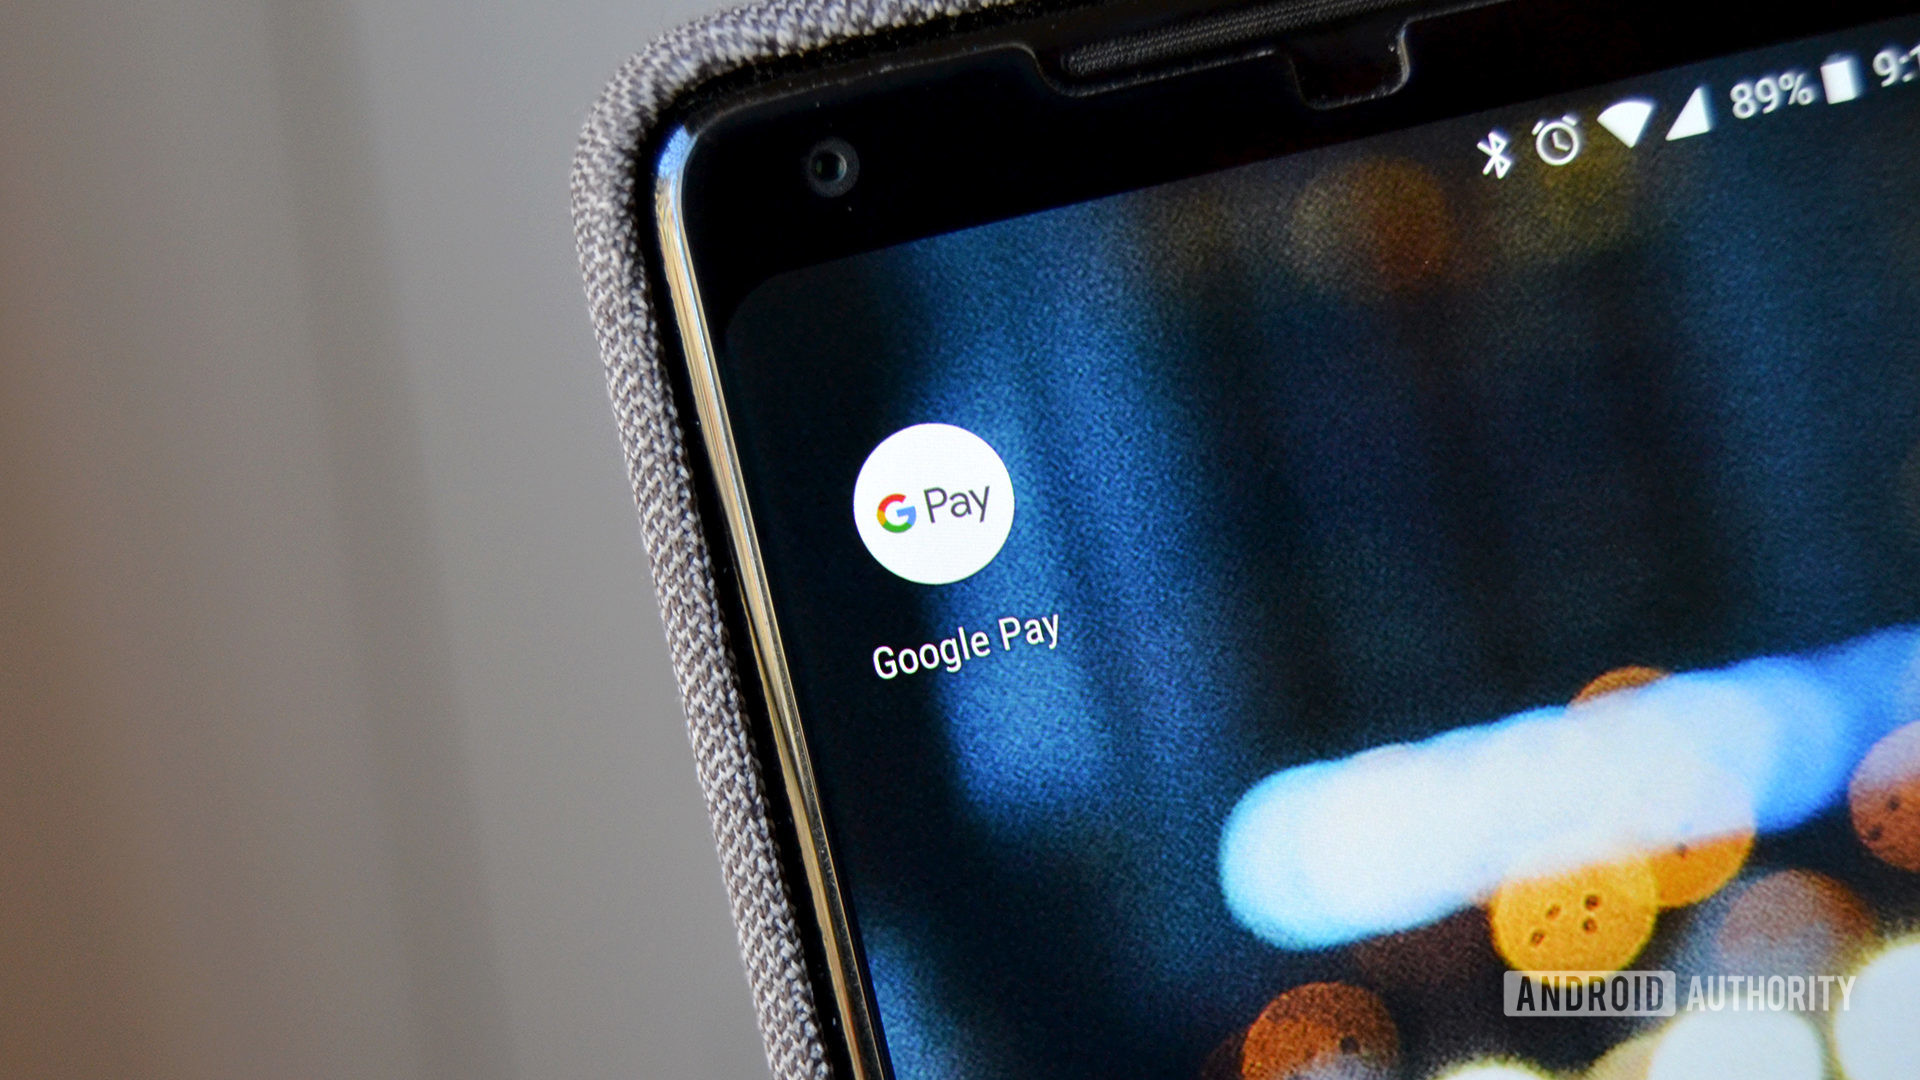 Google Pay app icon